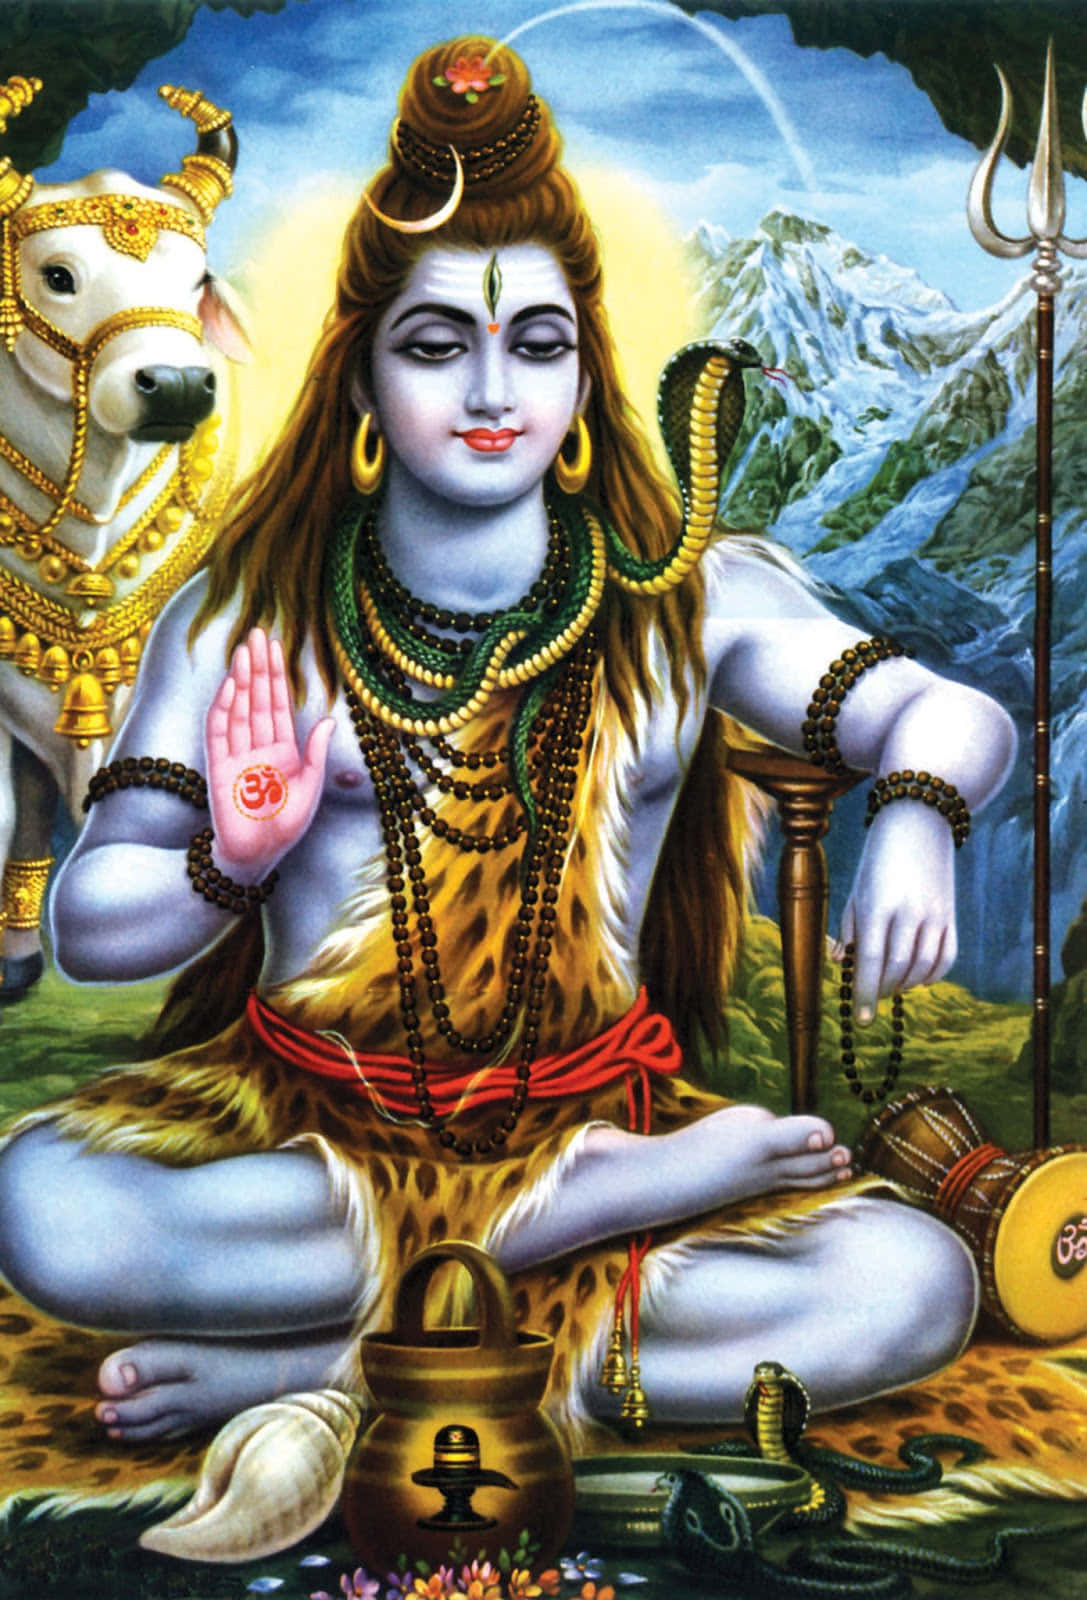 Imagendel Dios Hindú Shiva